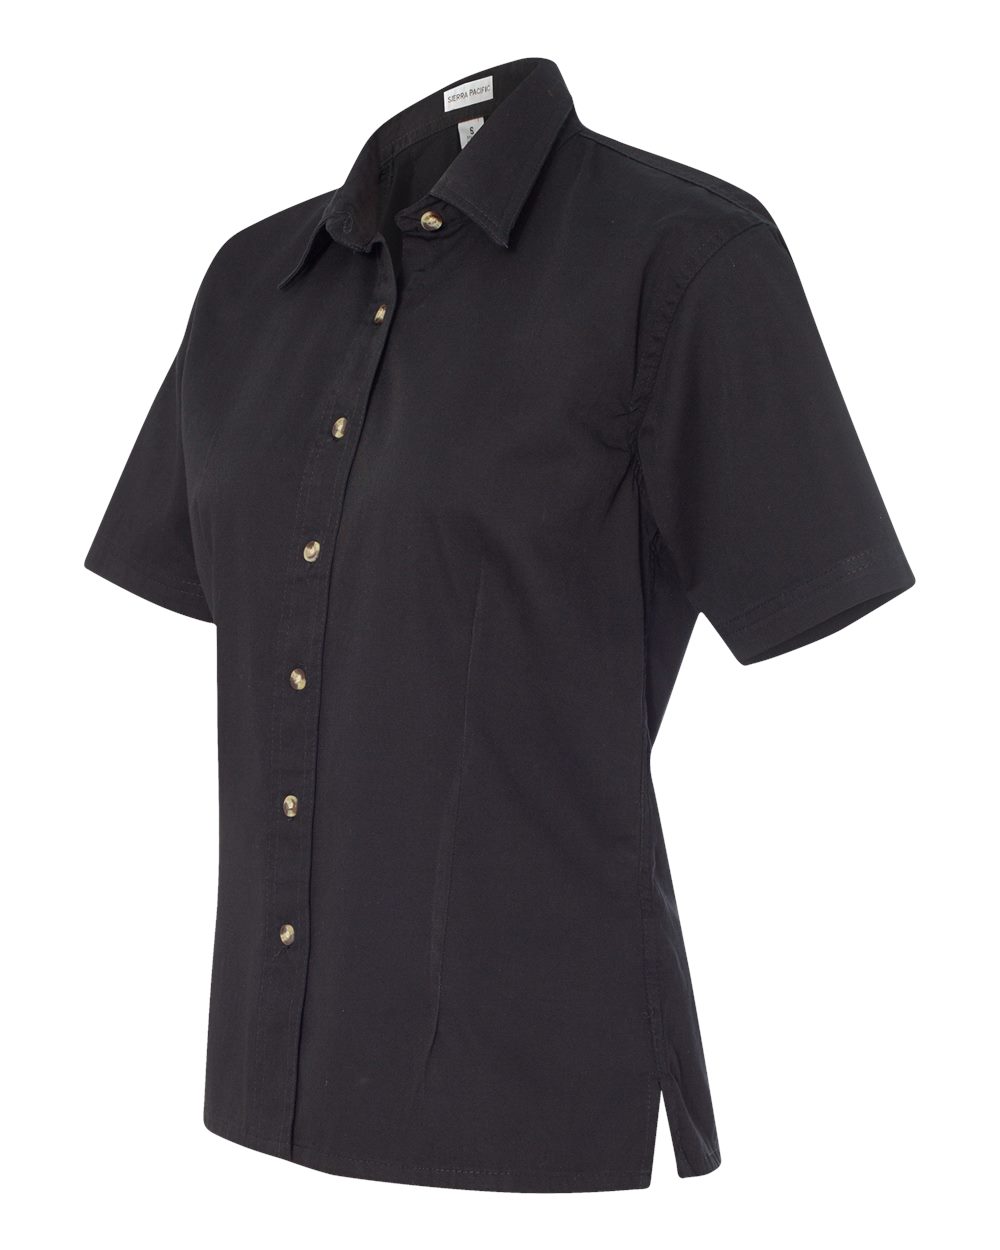 Sierra Pacific 5202 Ladies' Short Sleeve Cotton Twill Shirt